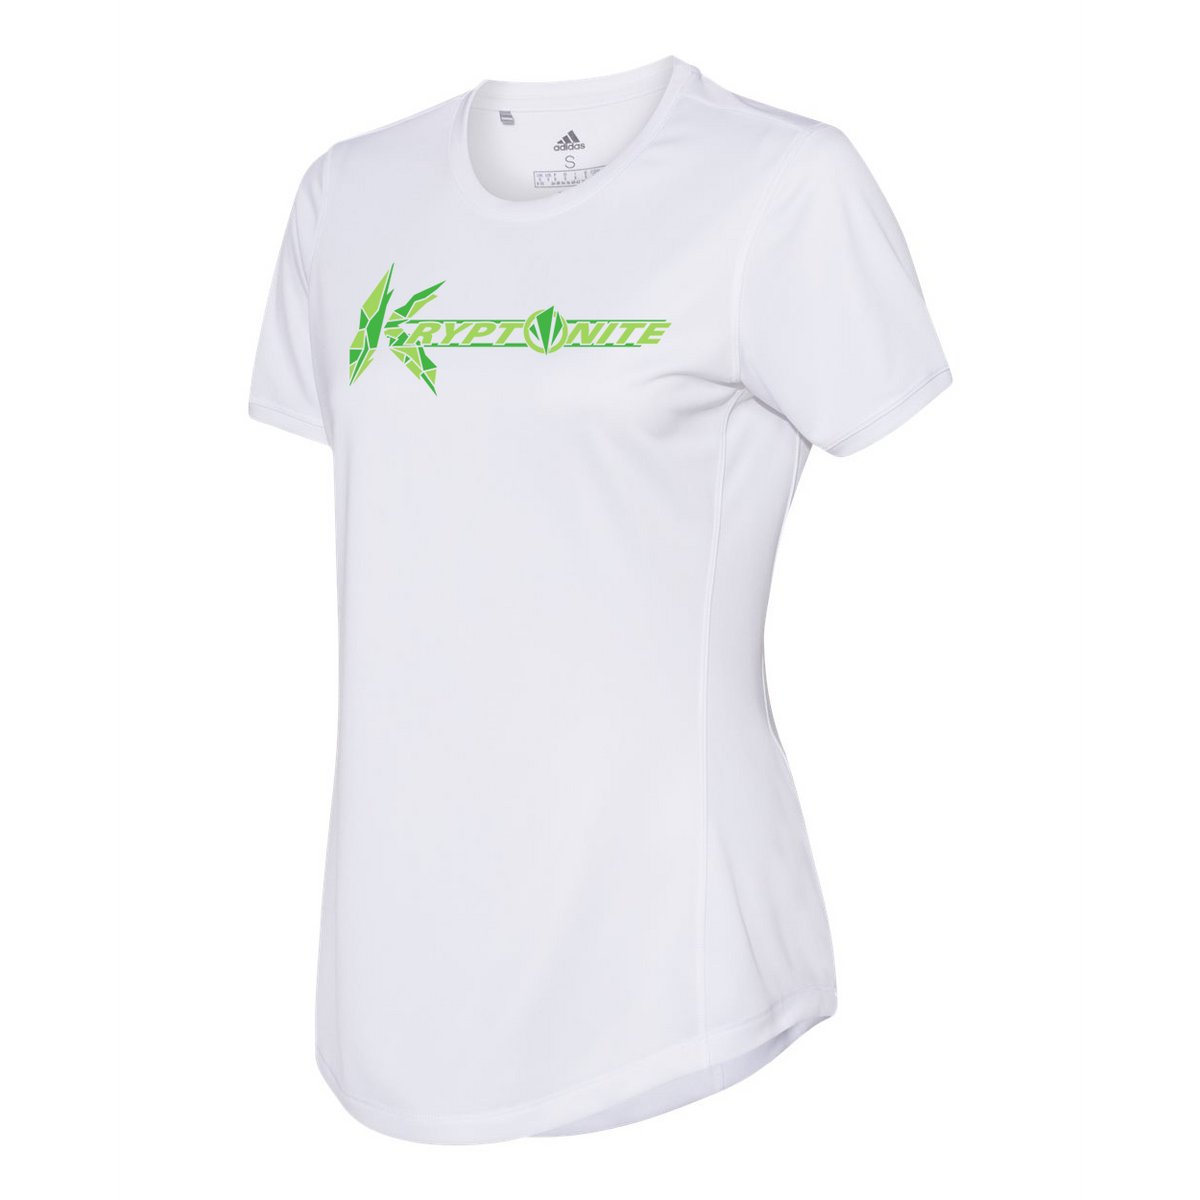 Utah Kryptonite Fastpitch Women's Adidas Sport T-Shirt